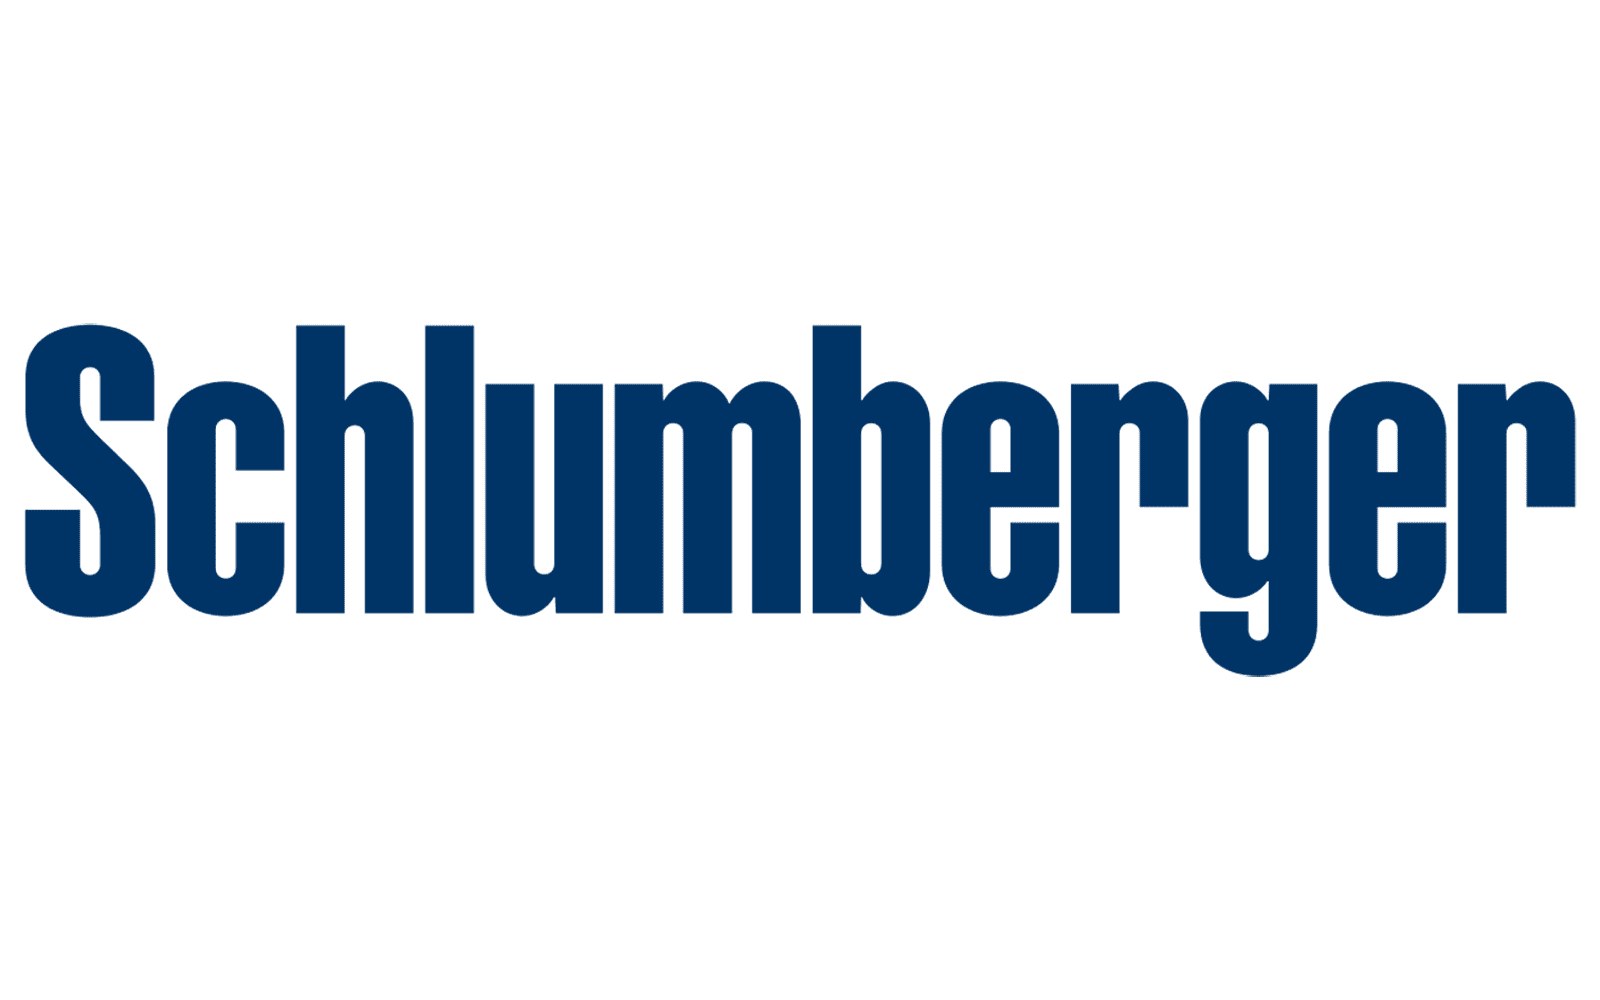 Logo of Schlumberger